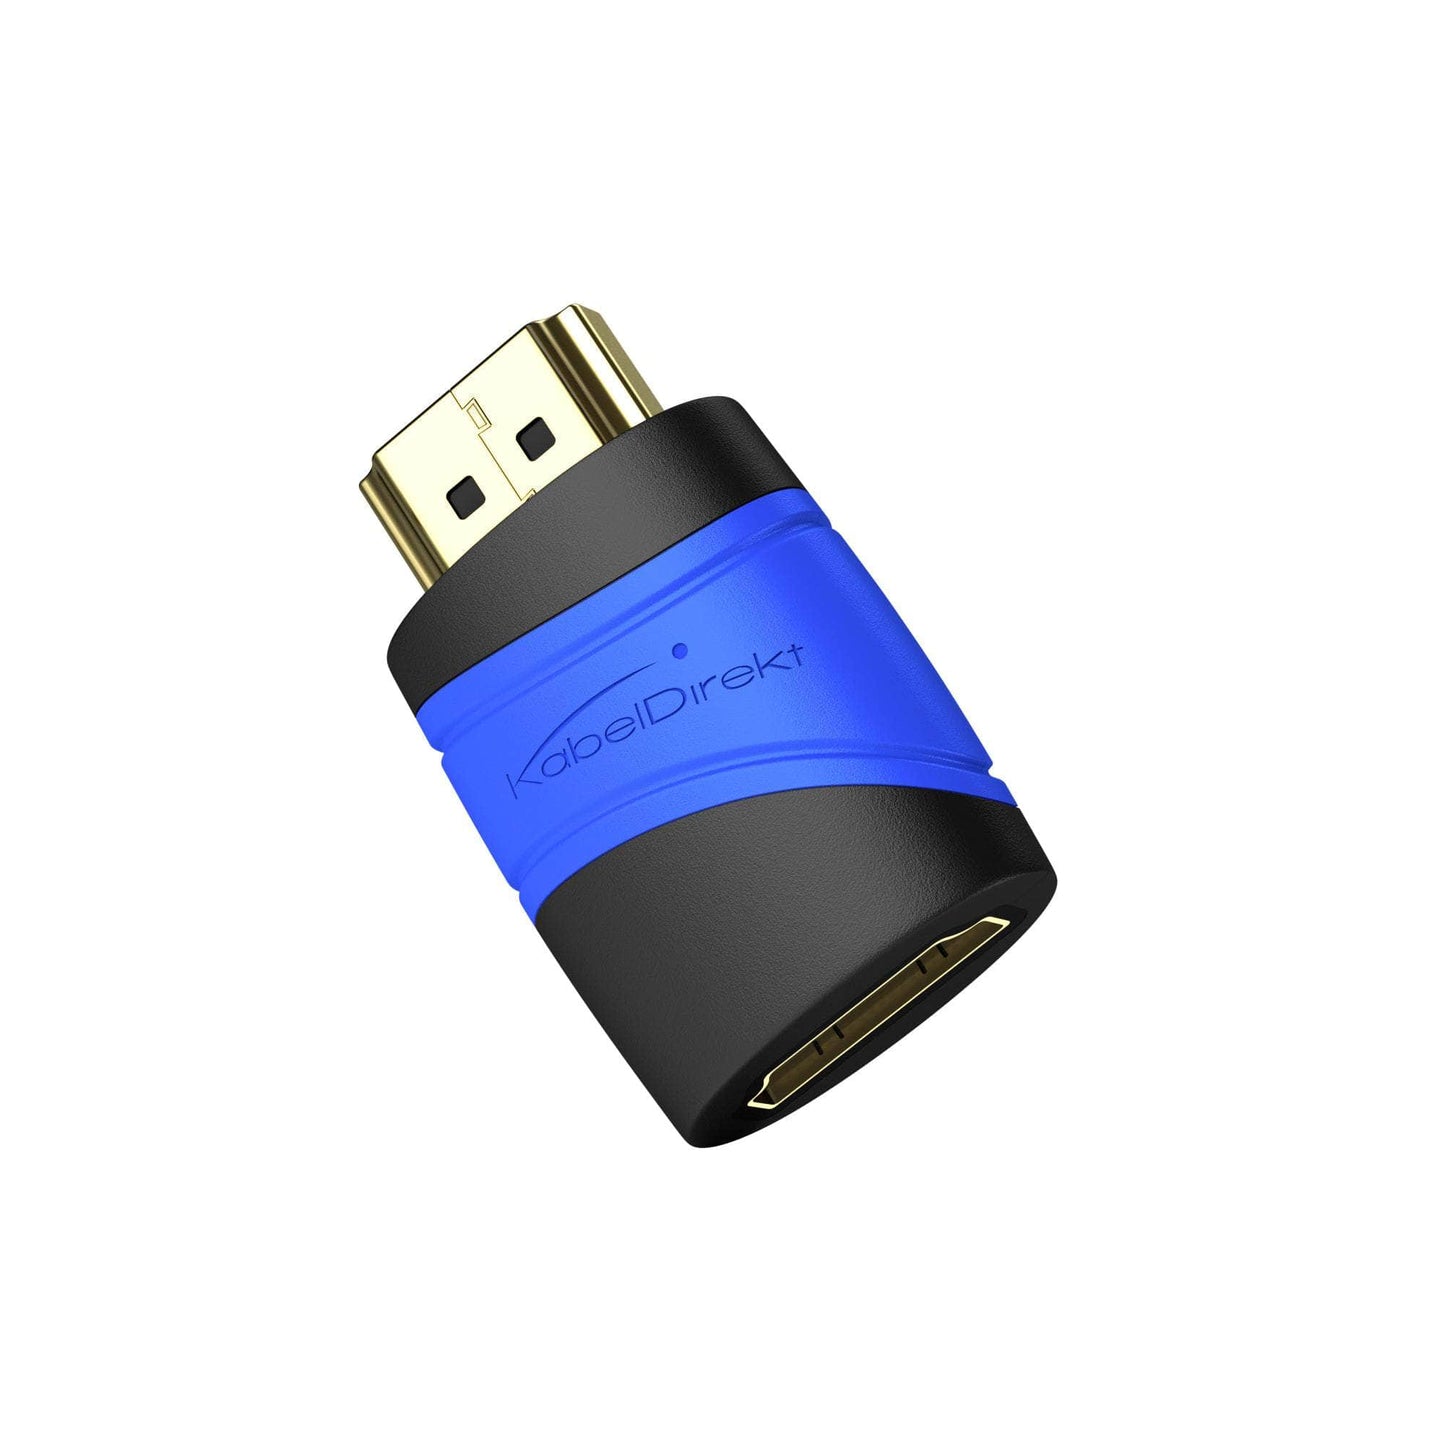 HDMI-Adapter Stecker/Buchse, Adapterstecker